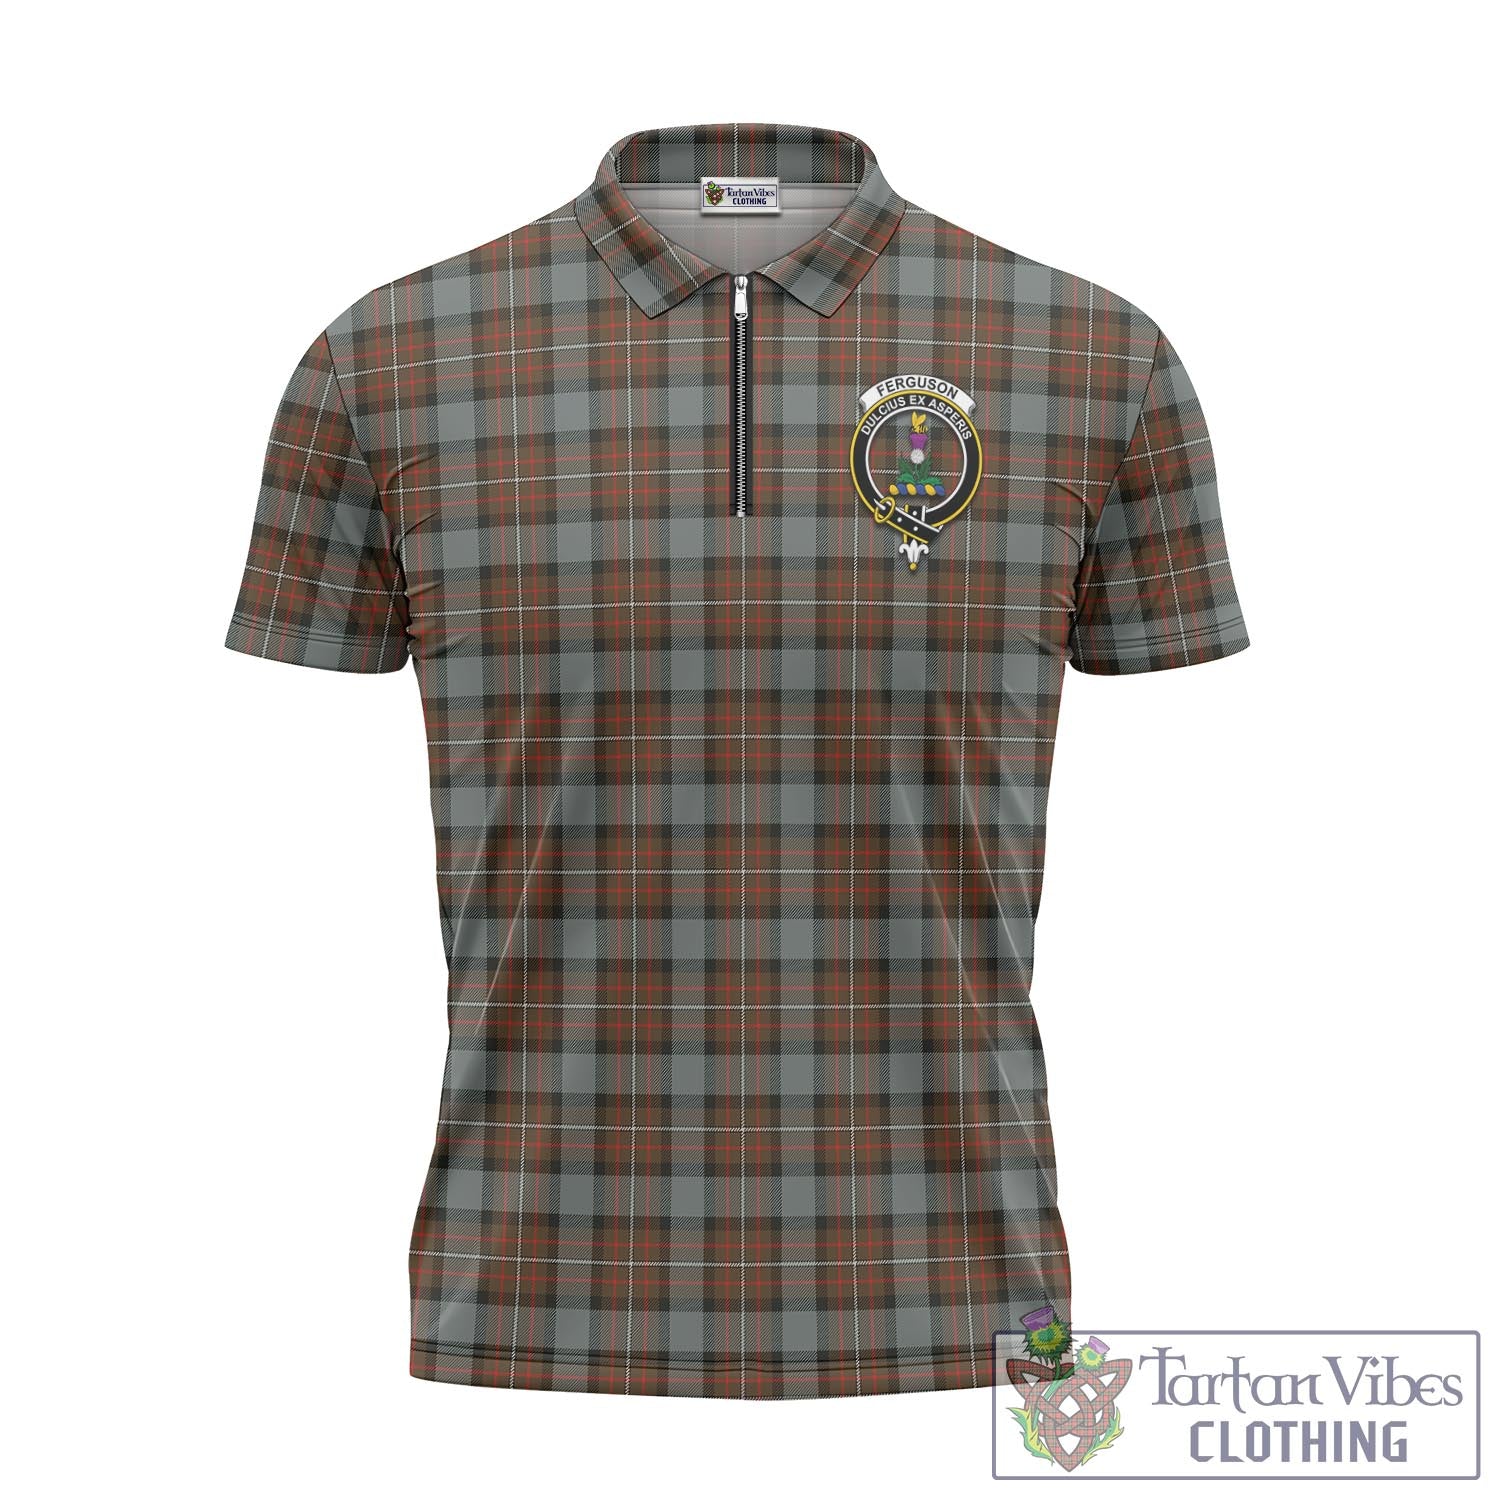 Tartan Vibes Clothing Ferguson Weathered Tartan Zipper Polo Shirt with Family Crest